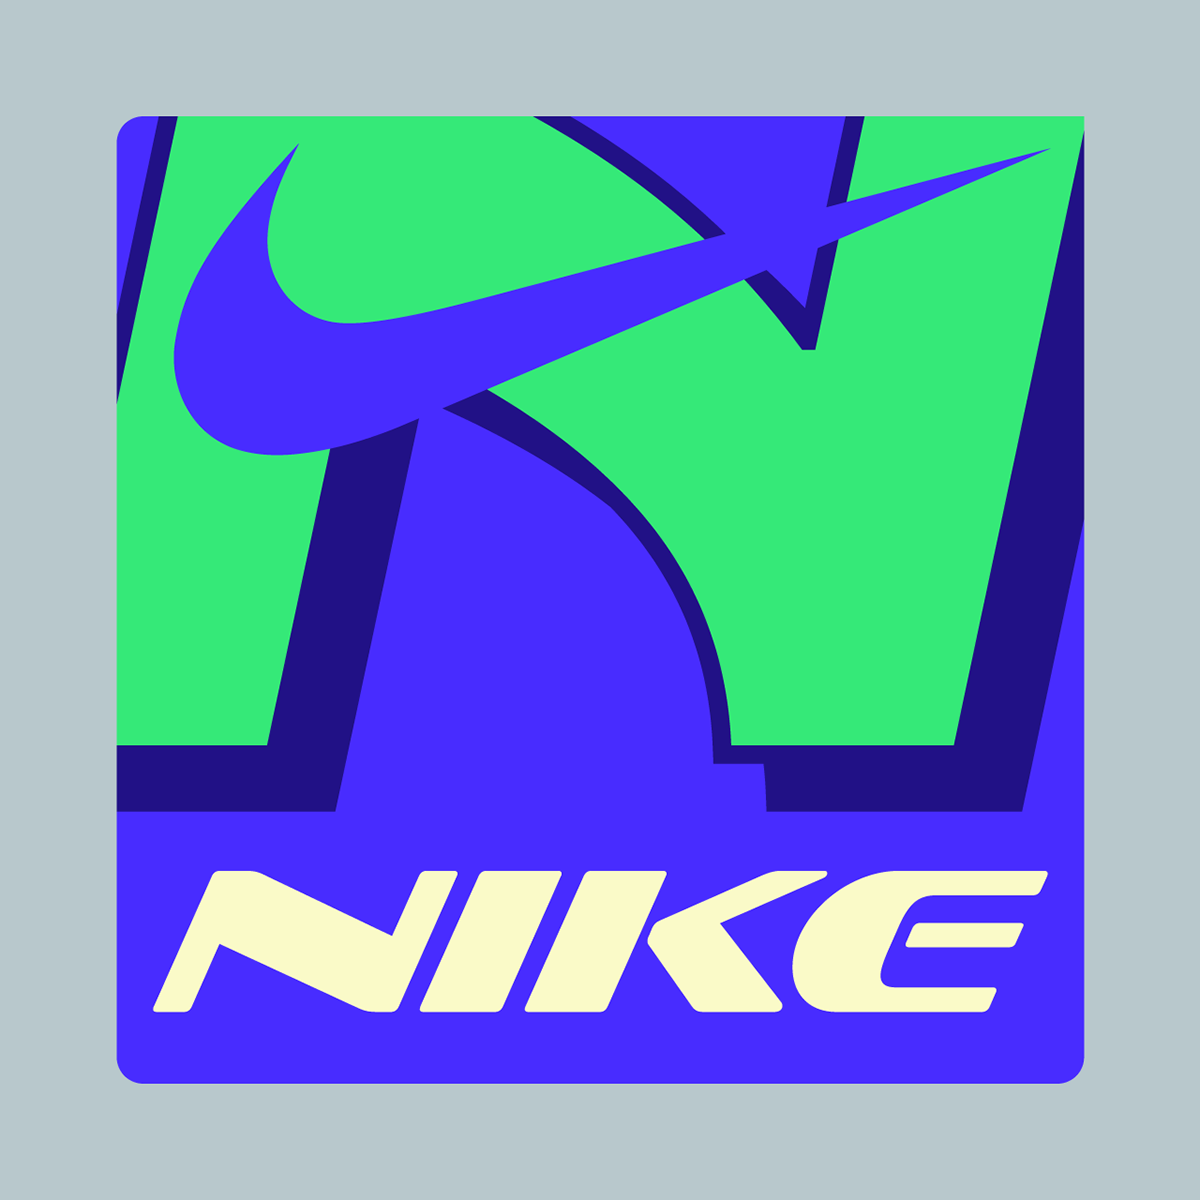 Nike ikea japan santa cruz skateboards Netflix Love instagram oreo George Orwell 1984 spotify